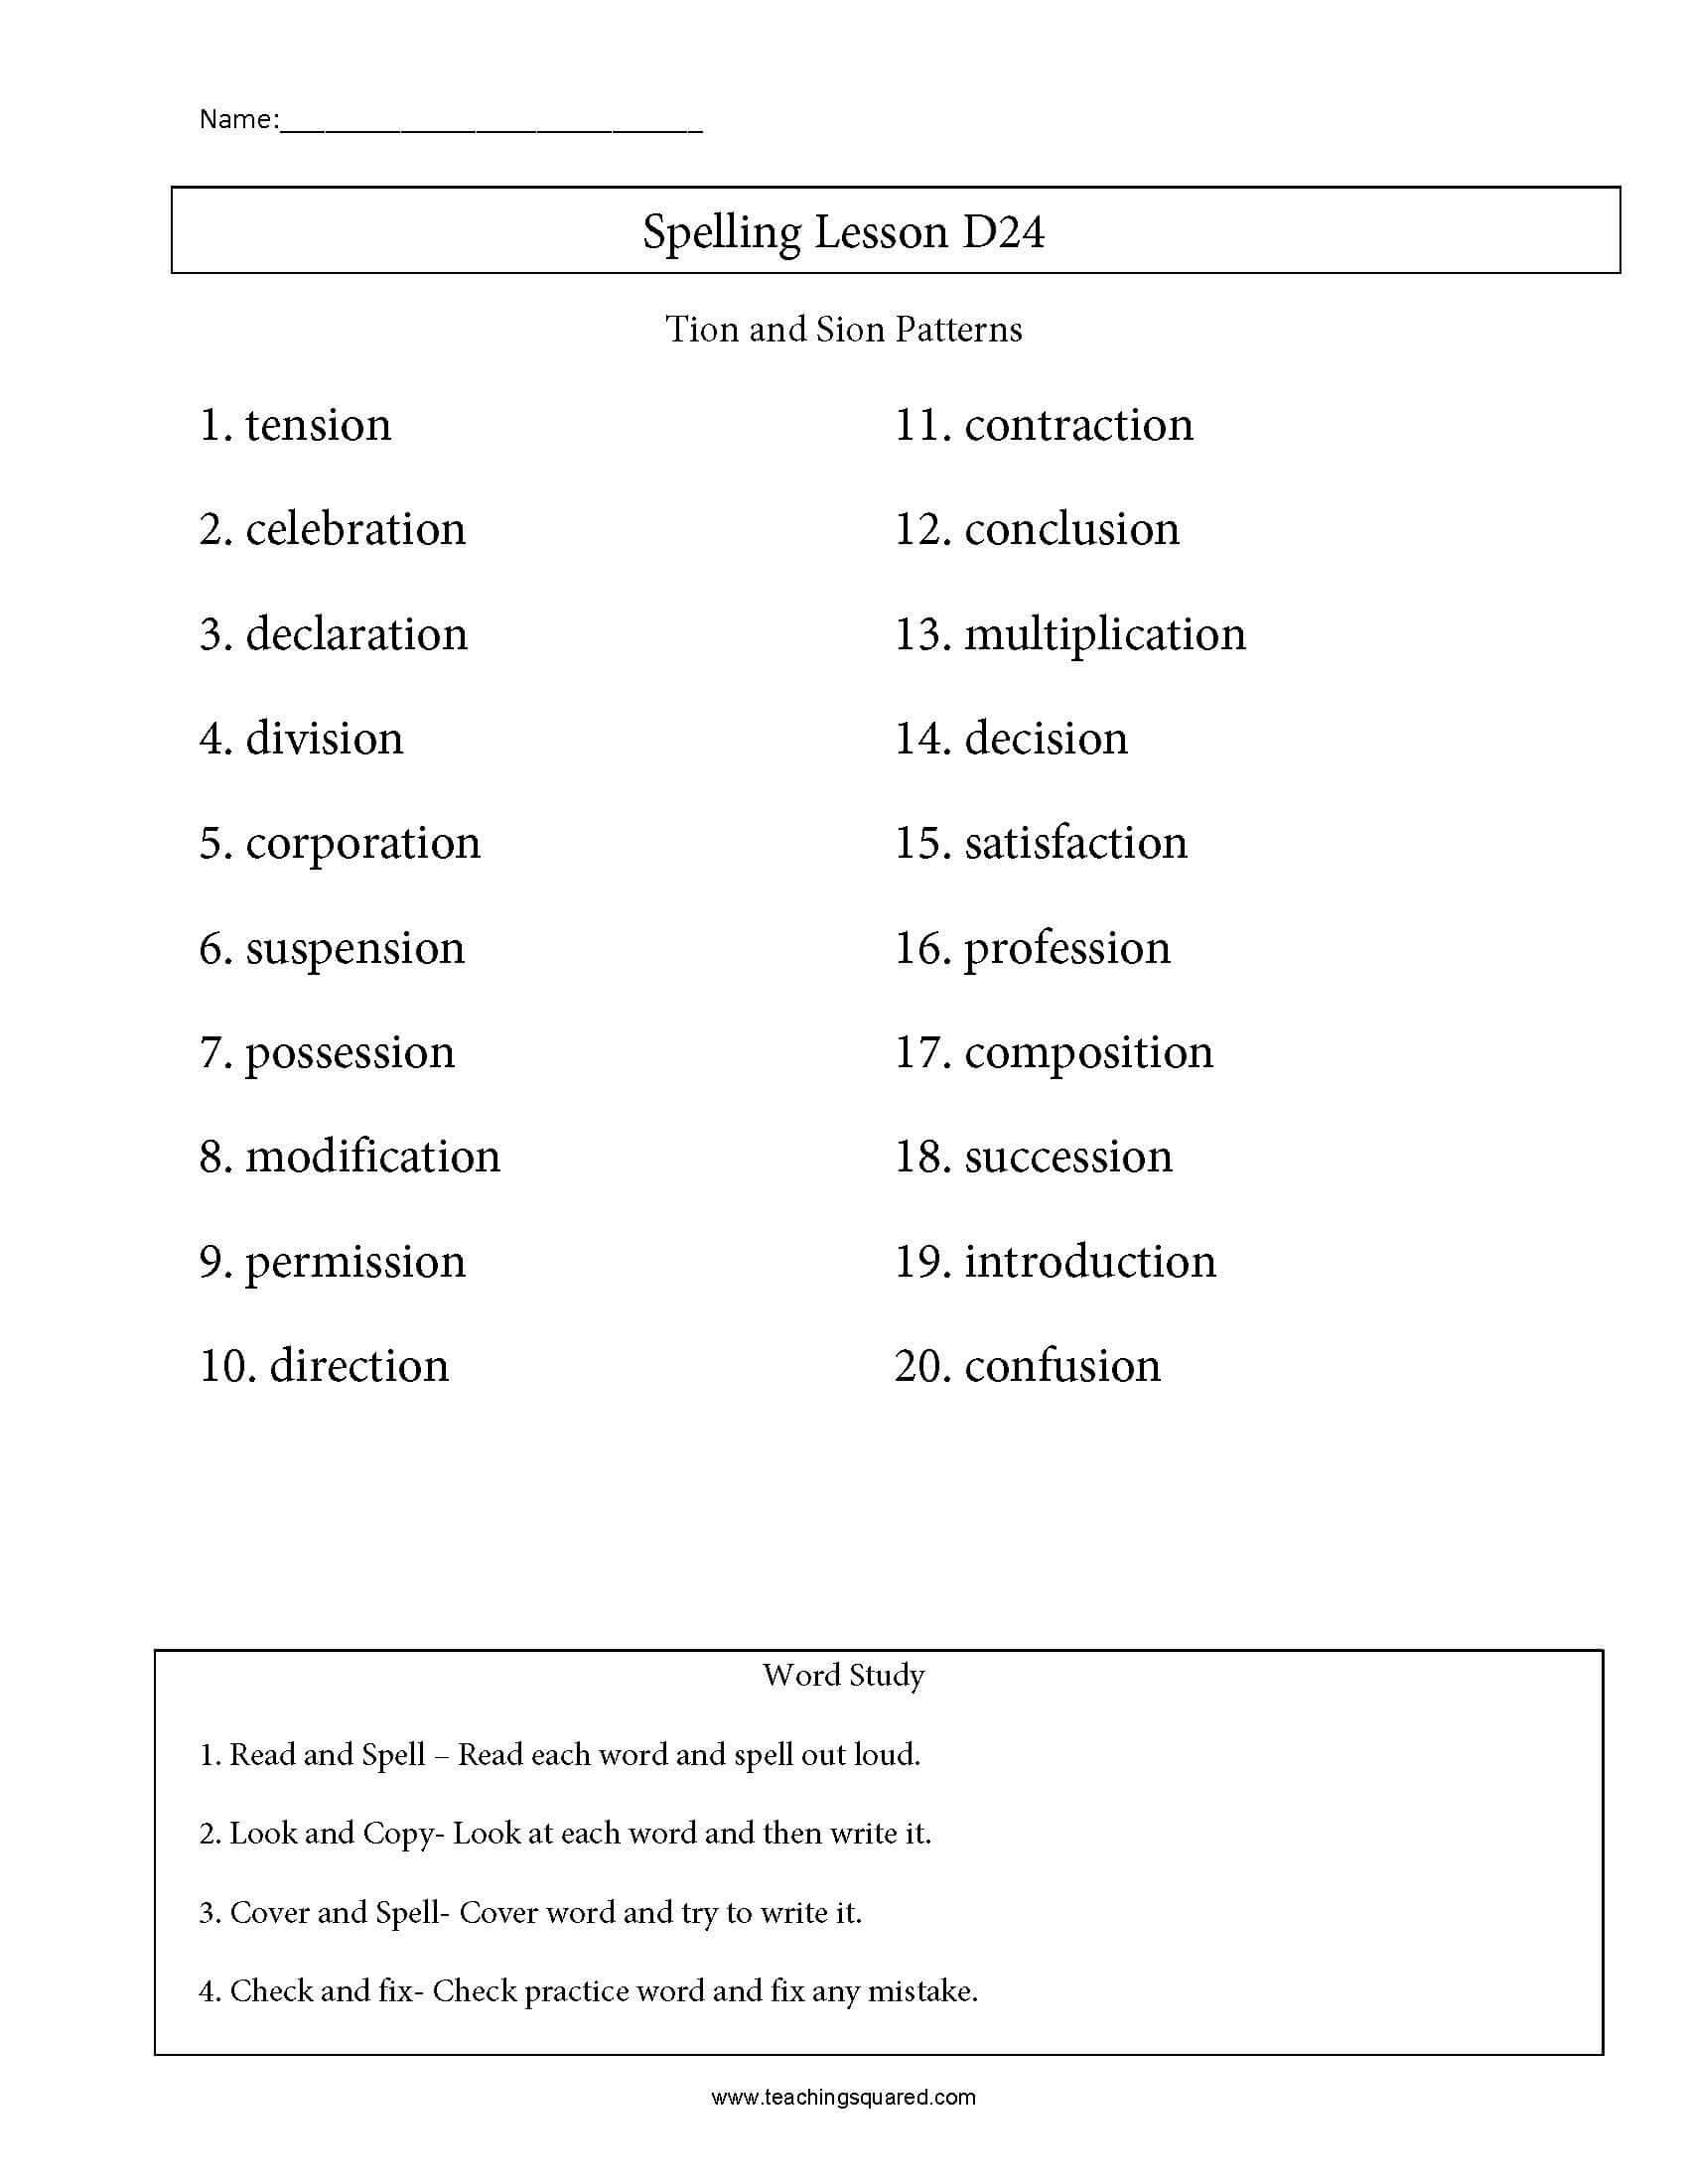 Spelling List Words D